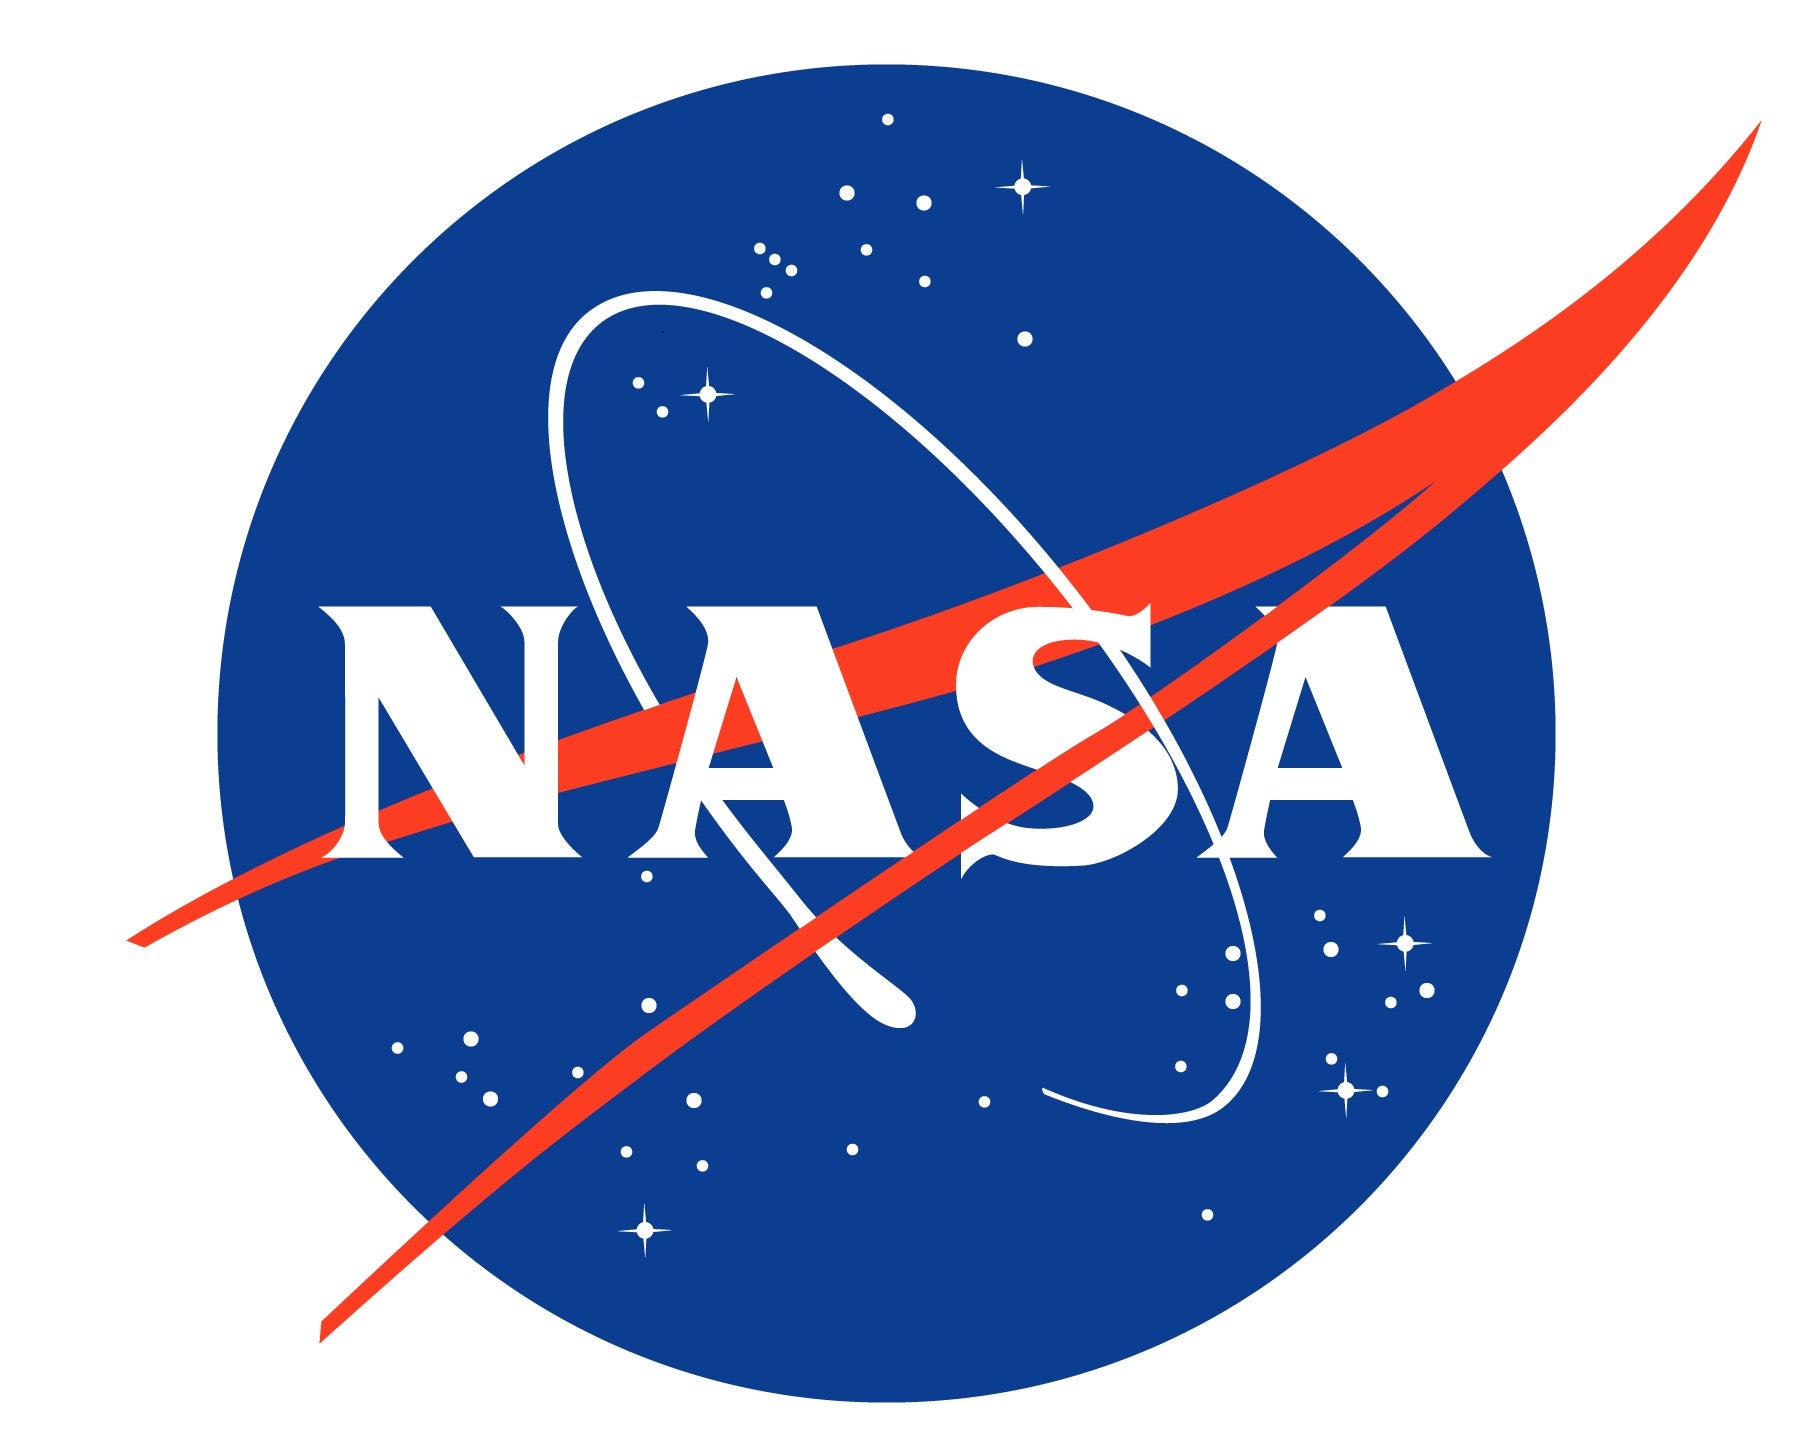 NASA's logo affectionally called the "meatball."